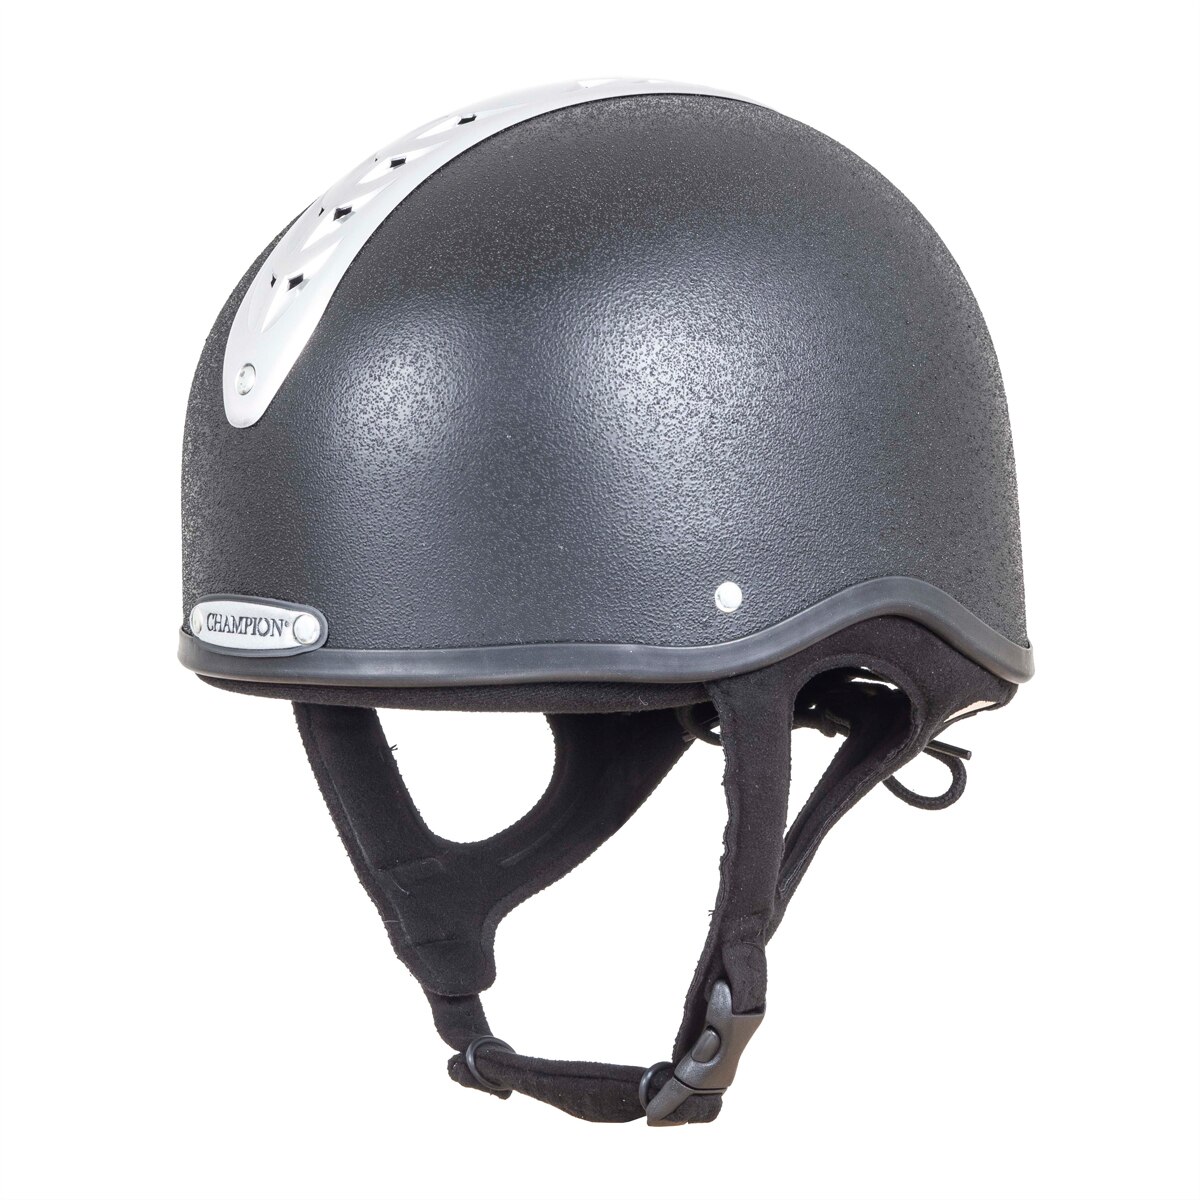 Champion Ventair Helmet Cover 